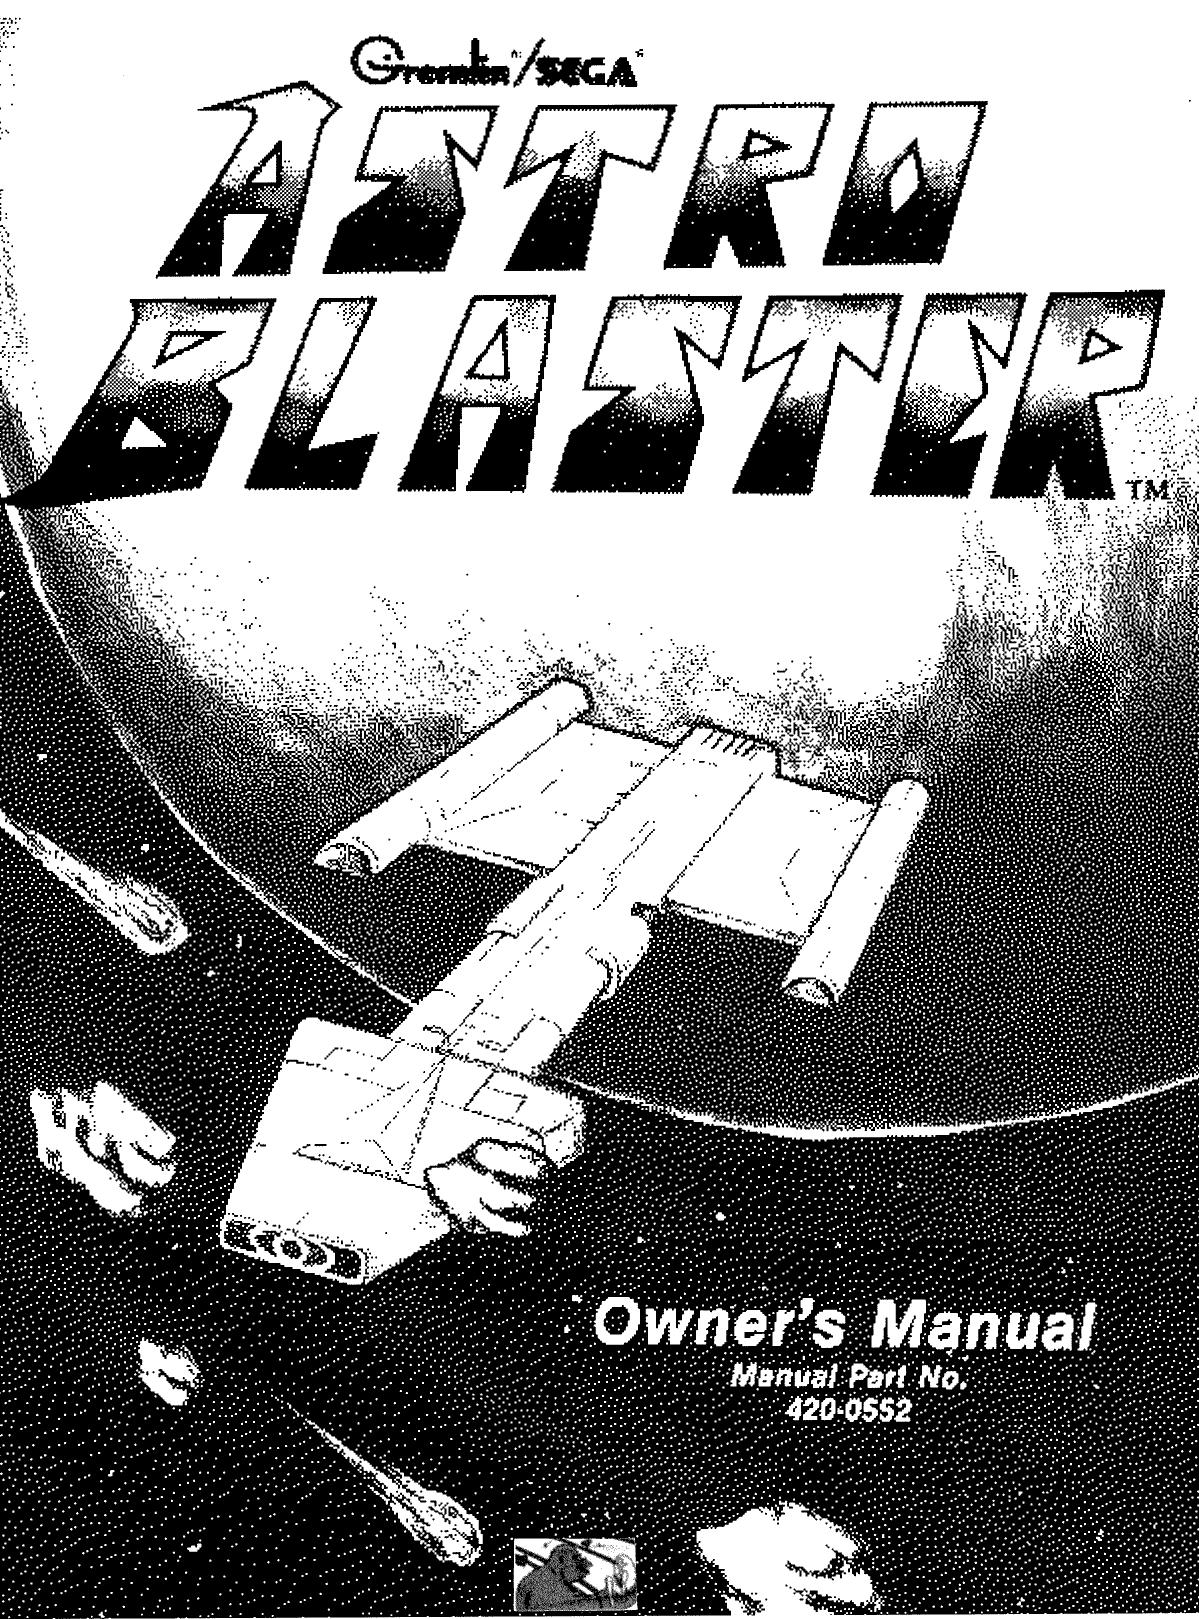 AstroBlaster Manual